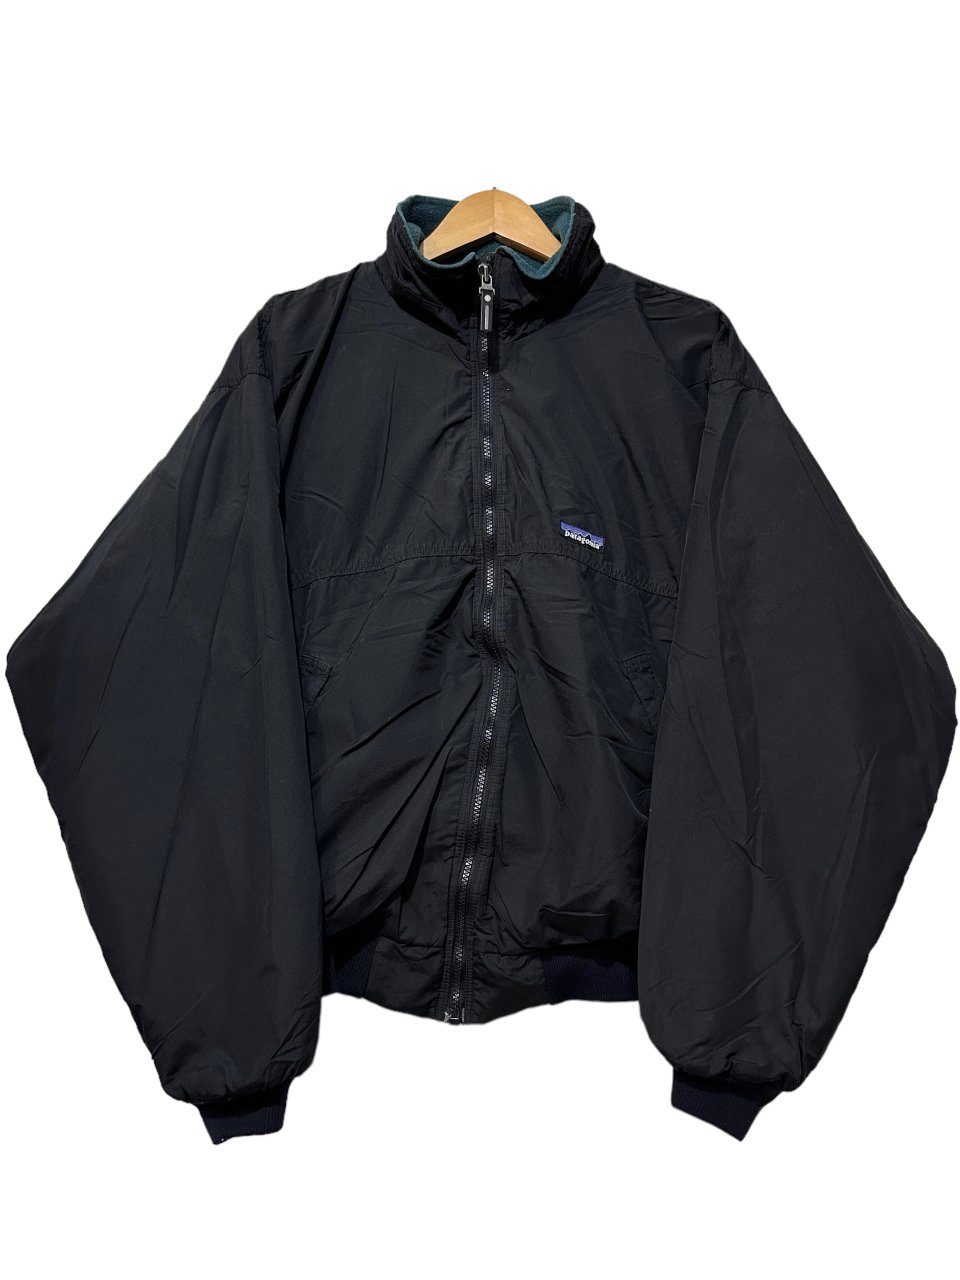 USA製 90s patagonia Shelled Synchilla Jacket 黒緑 L パタゴニア 